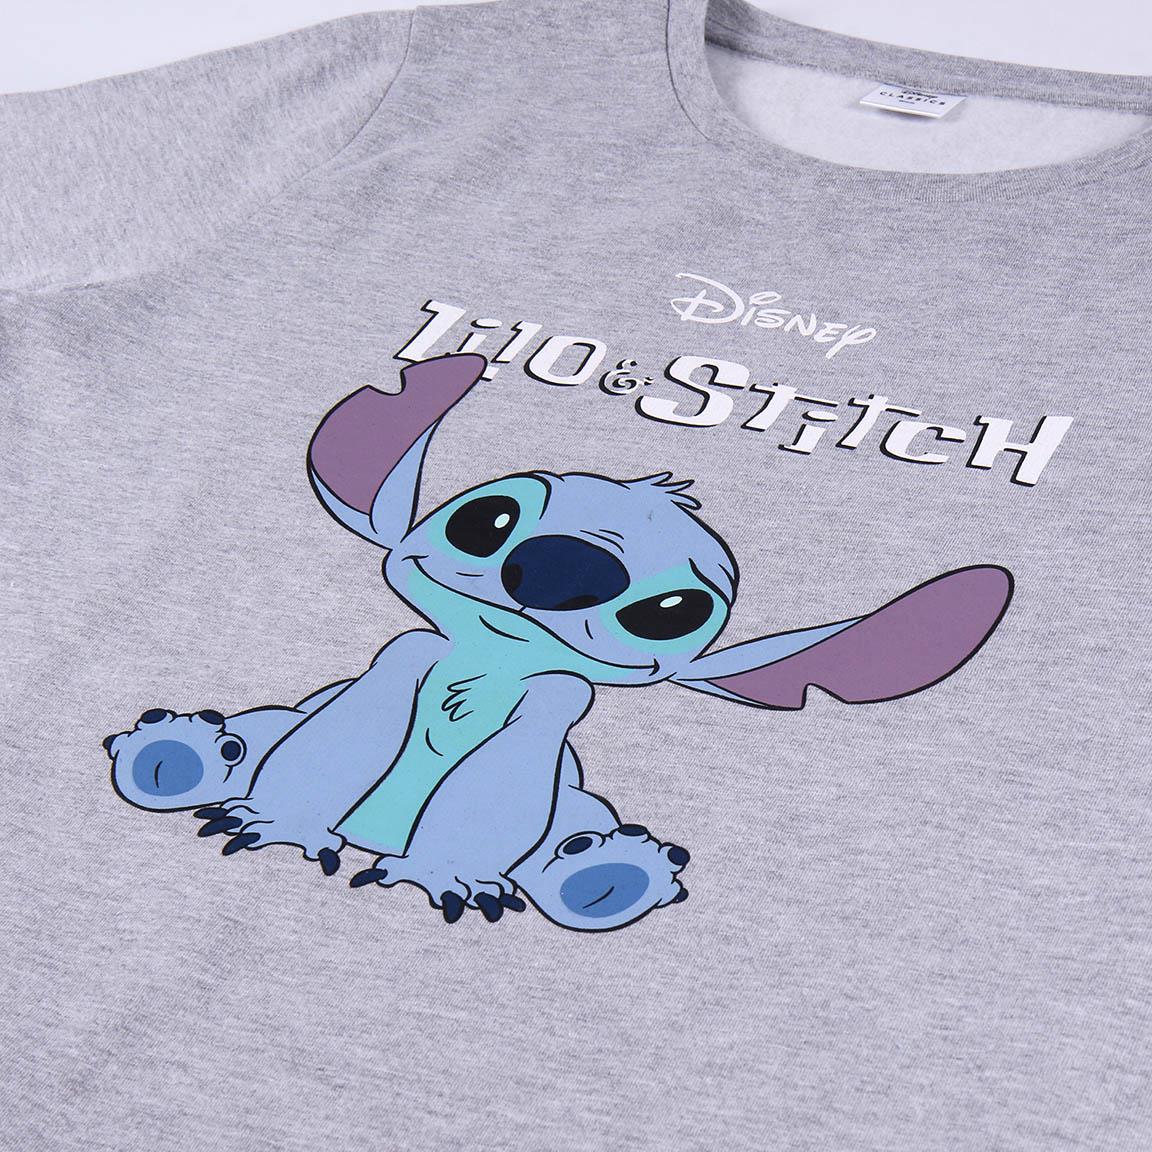 Disney - Sweat gris - Lilo & Stitch - Plusieurs taille pour adulte